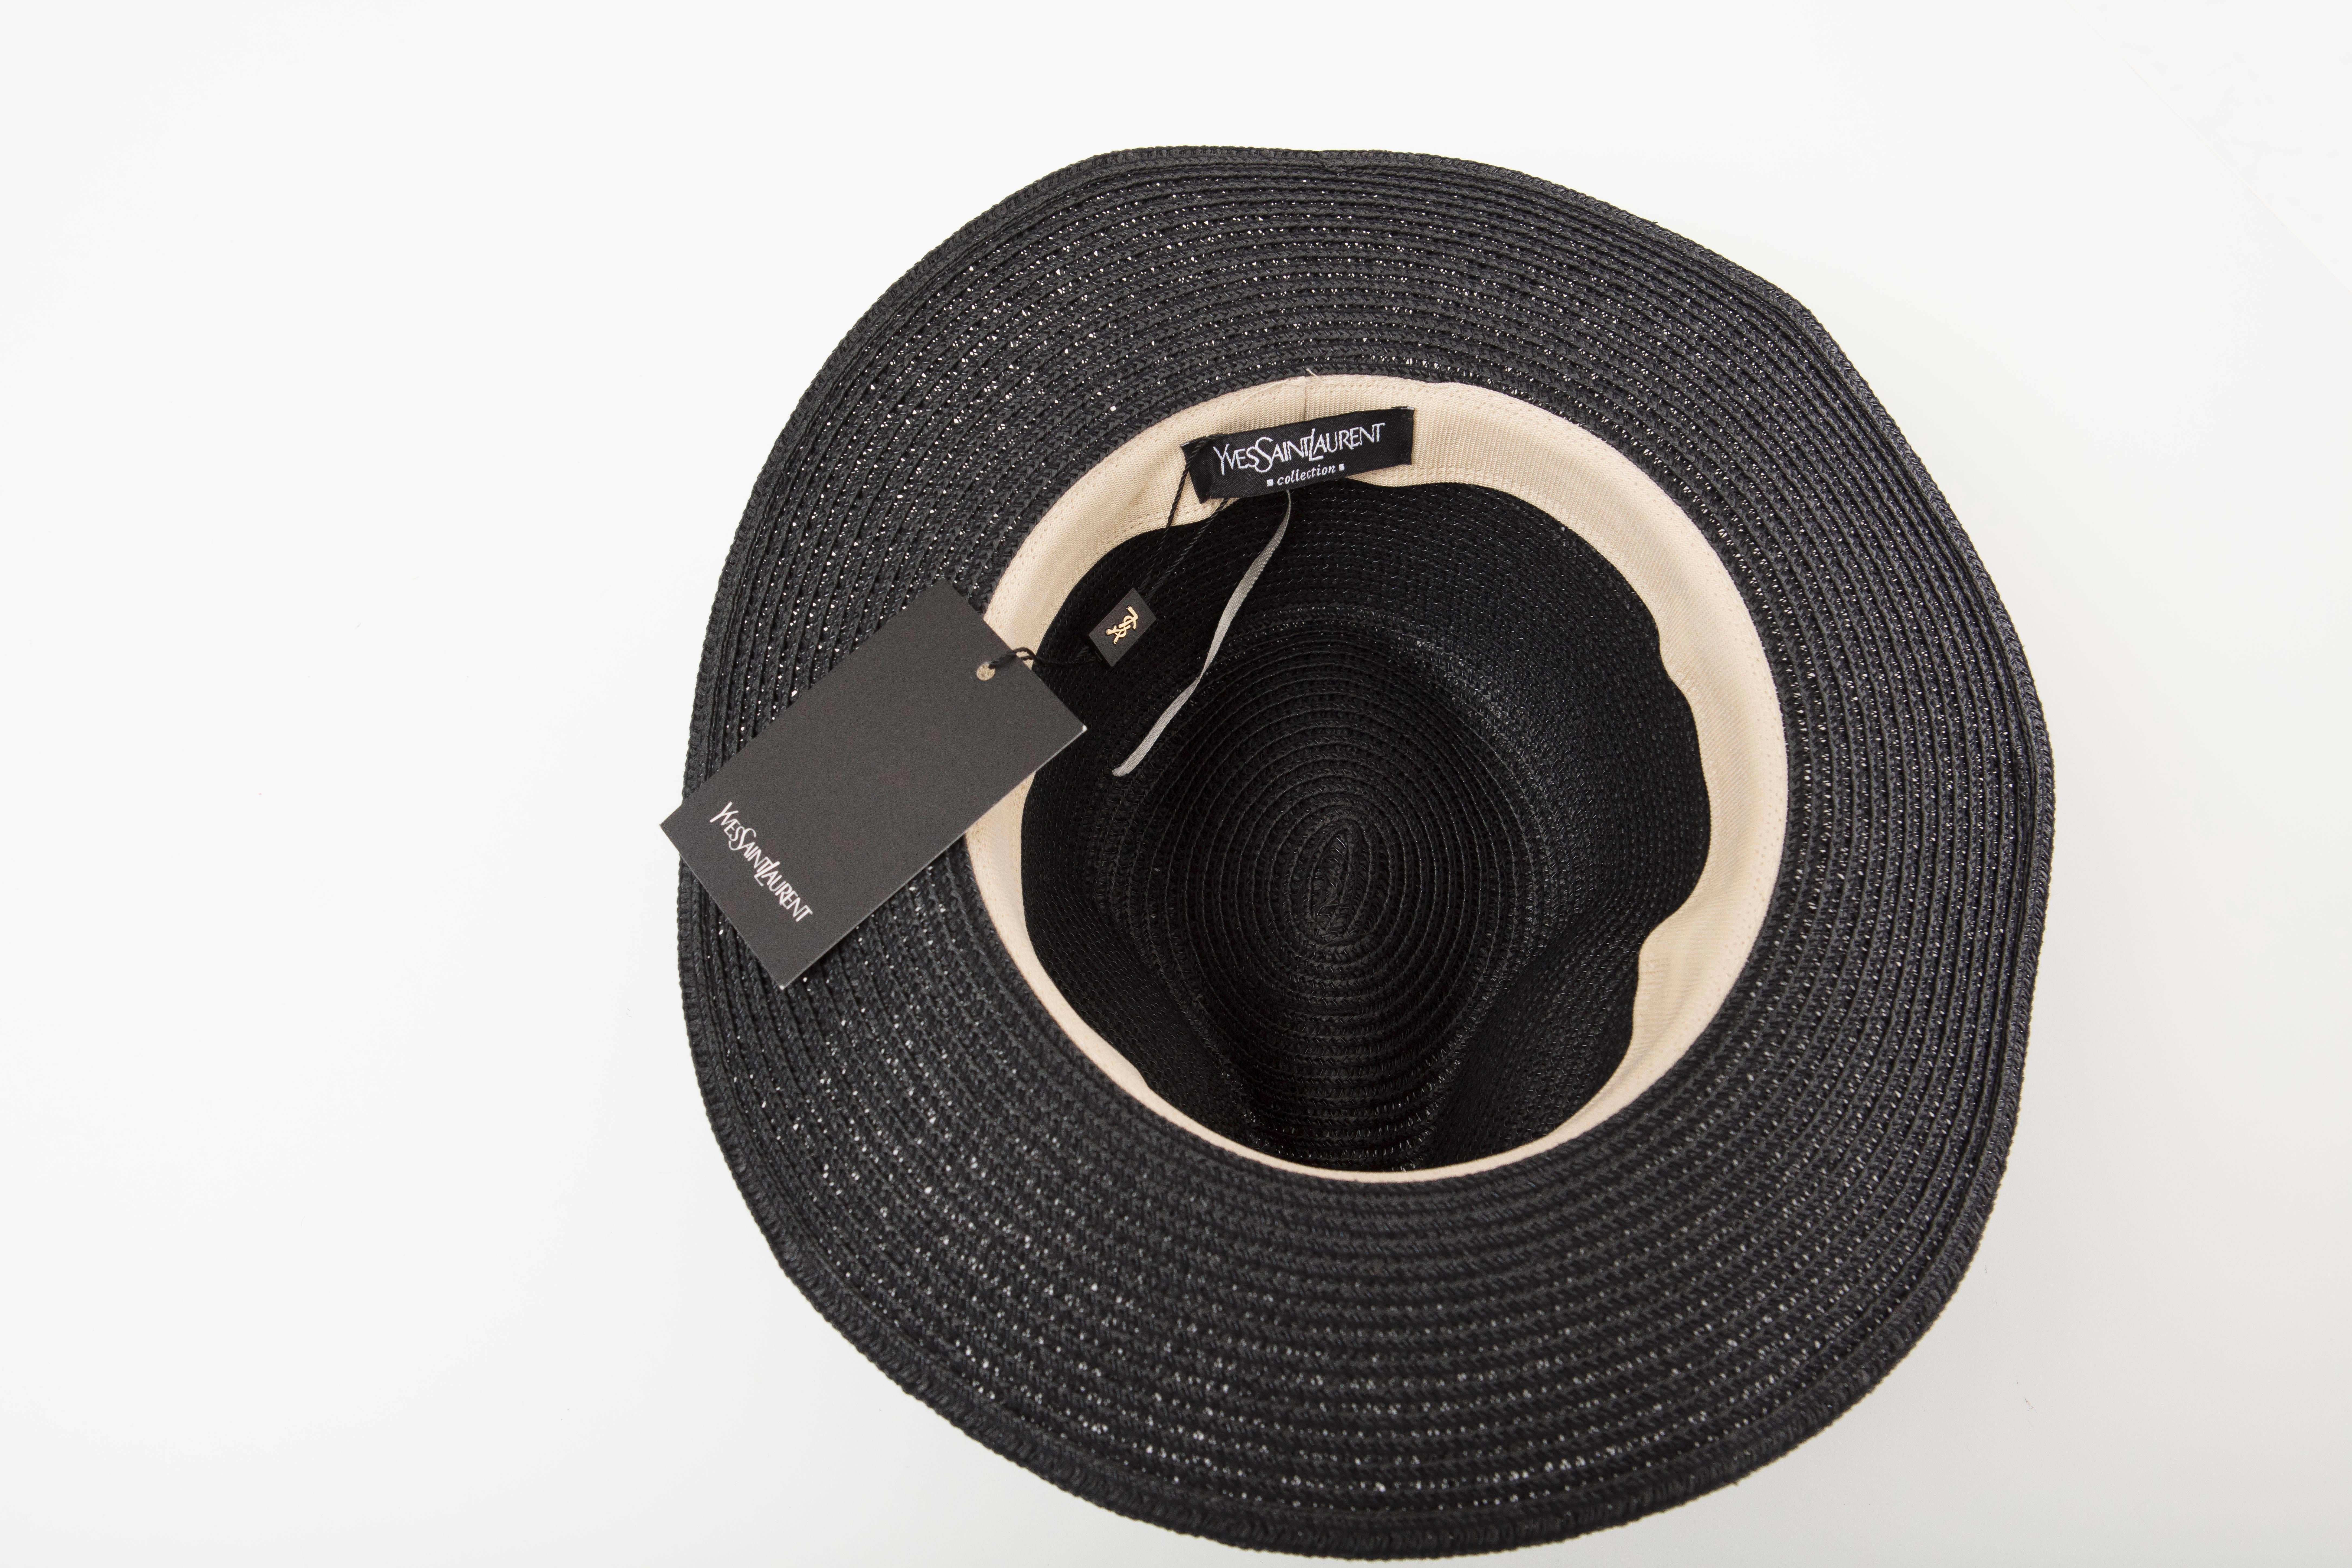 Yves Saint Laurent Black Straw Hat With Crystal Stars And Black Grosgrain Trim 5